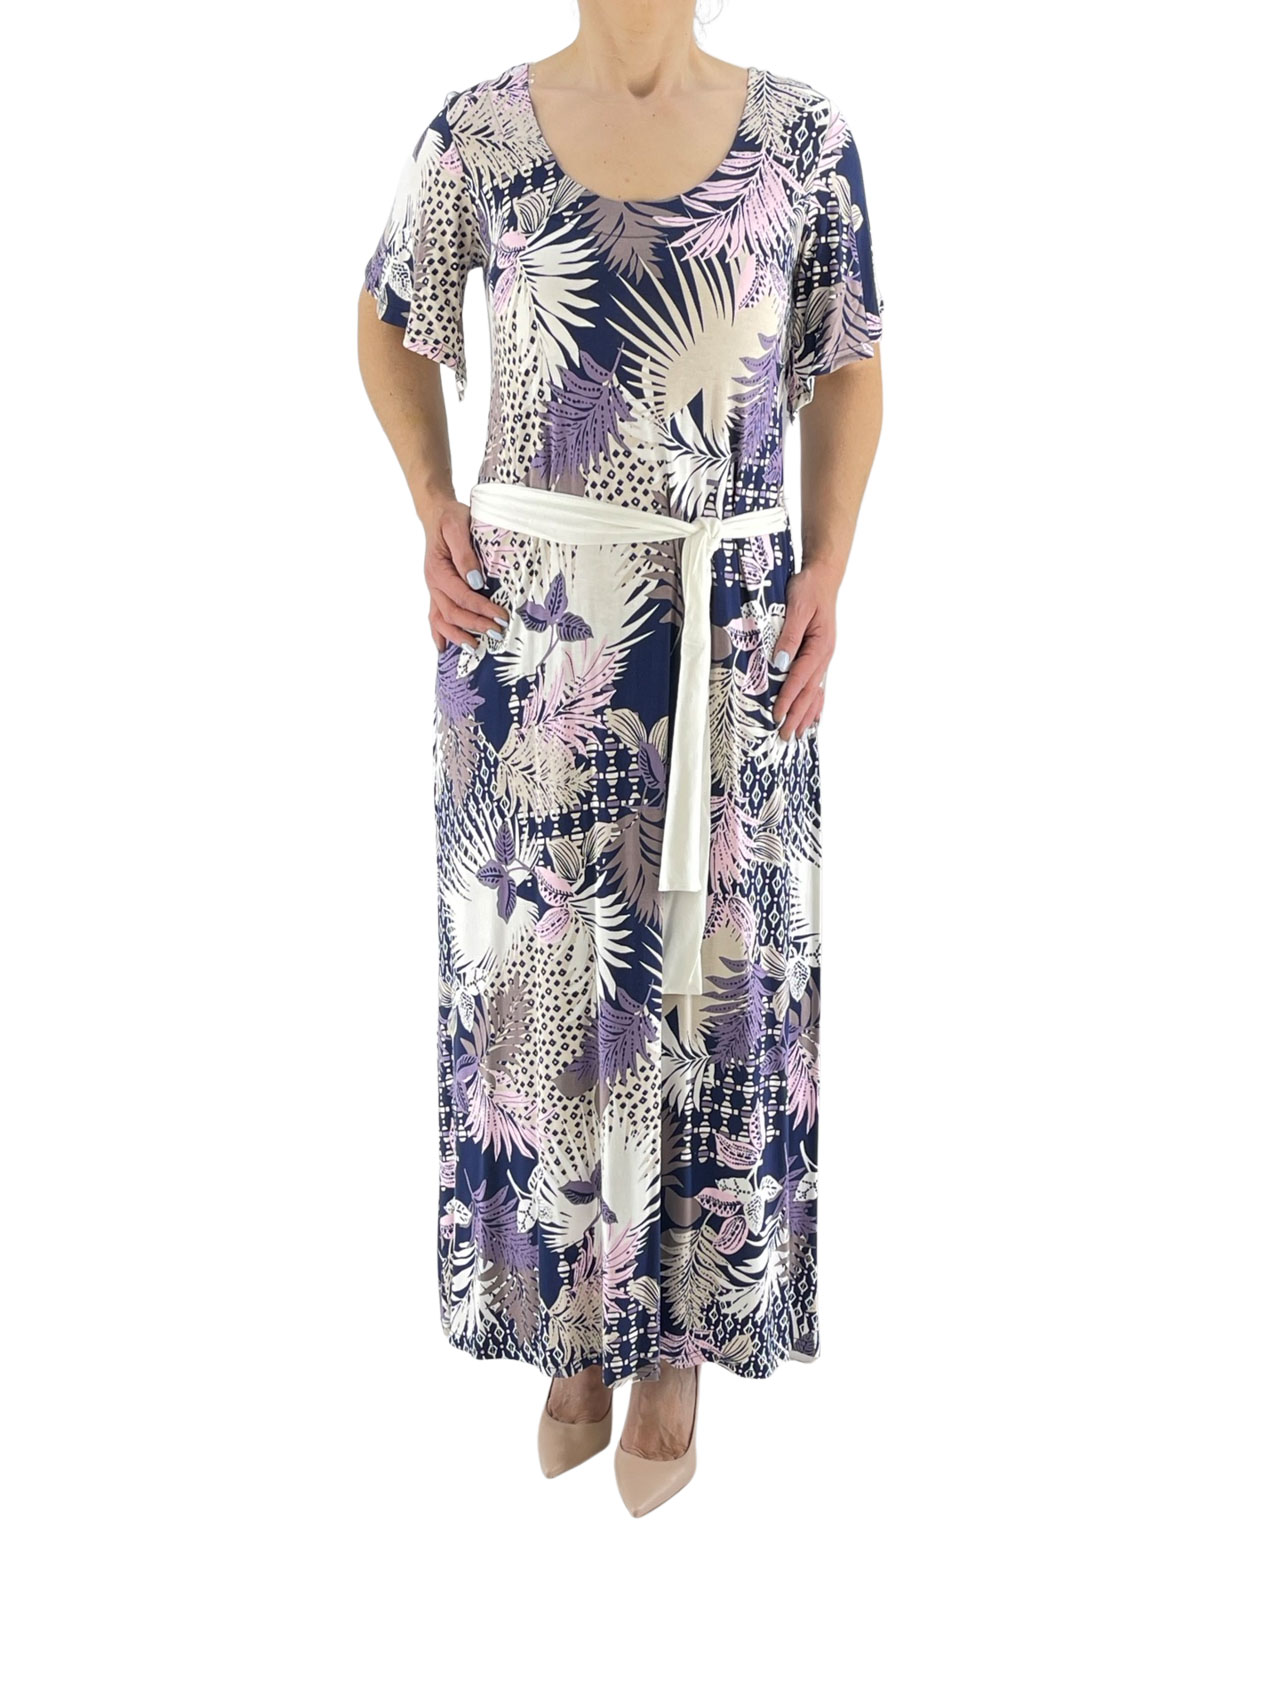 Women's printed dress with belt code 32186